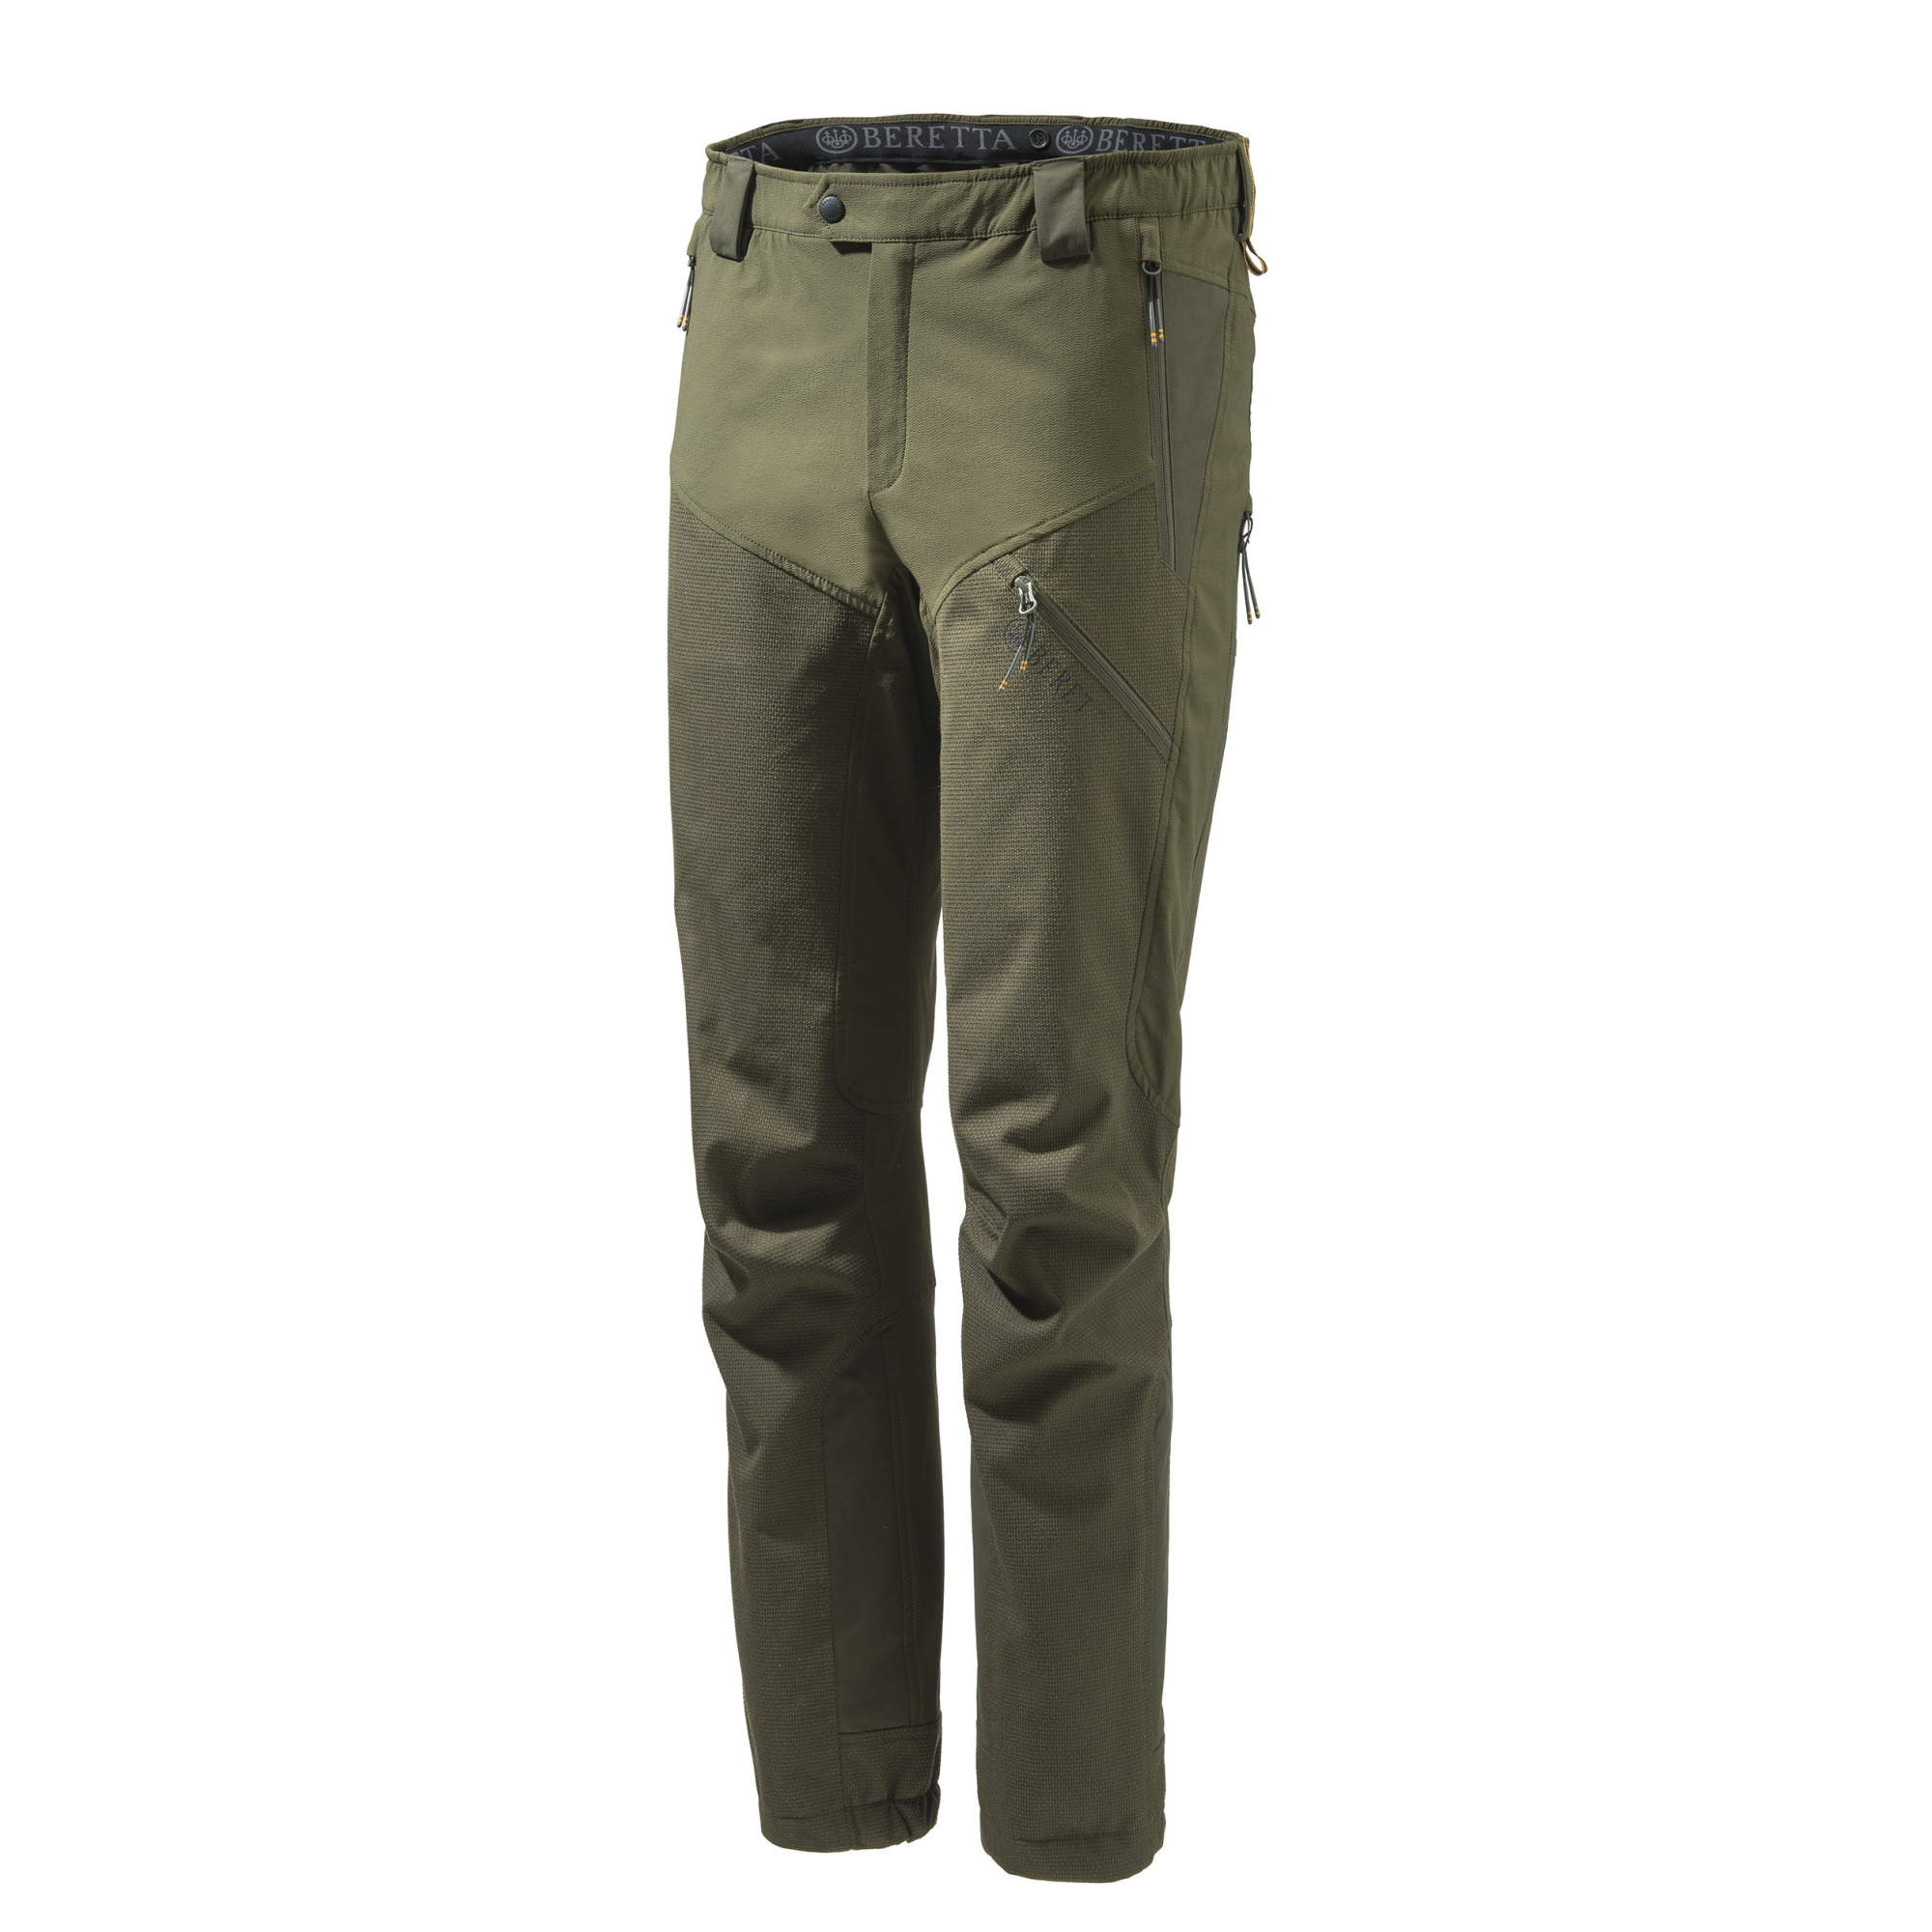 Men’s Thorn Resistant EVO Pants Green Moss